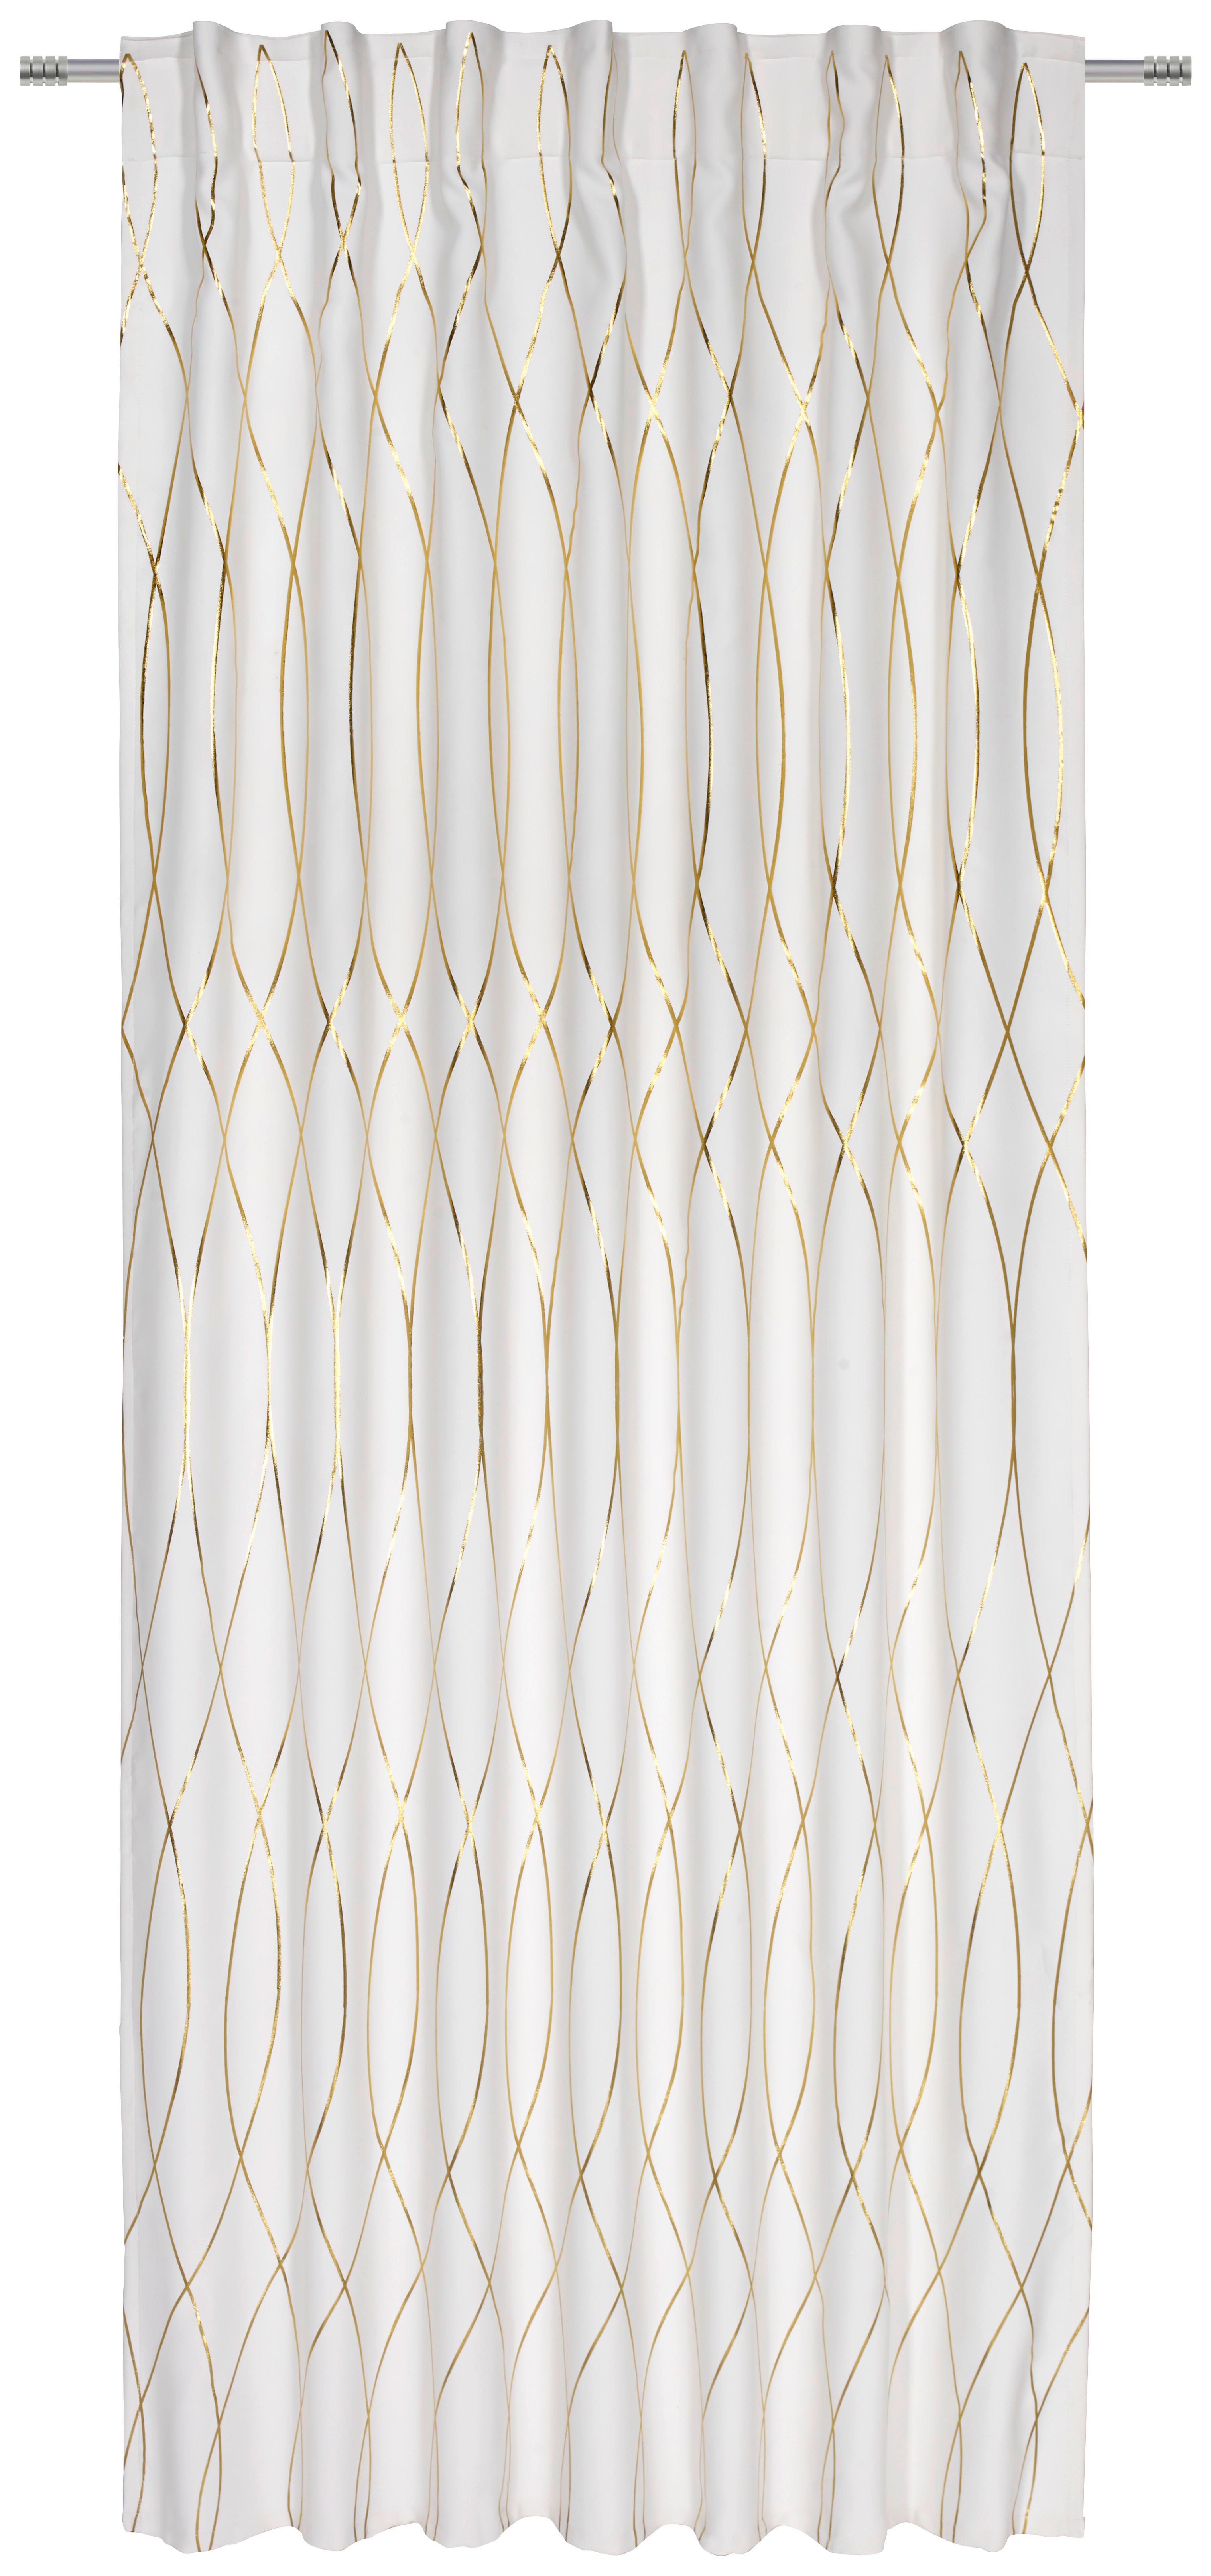 Zatemňovací Záves Glamour, 140/245 Cm - biela/zlatá, Štýlový, textil (140/245cm) - Modern Living